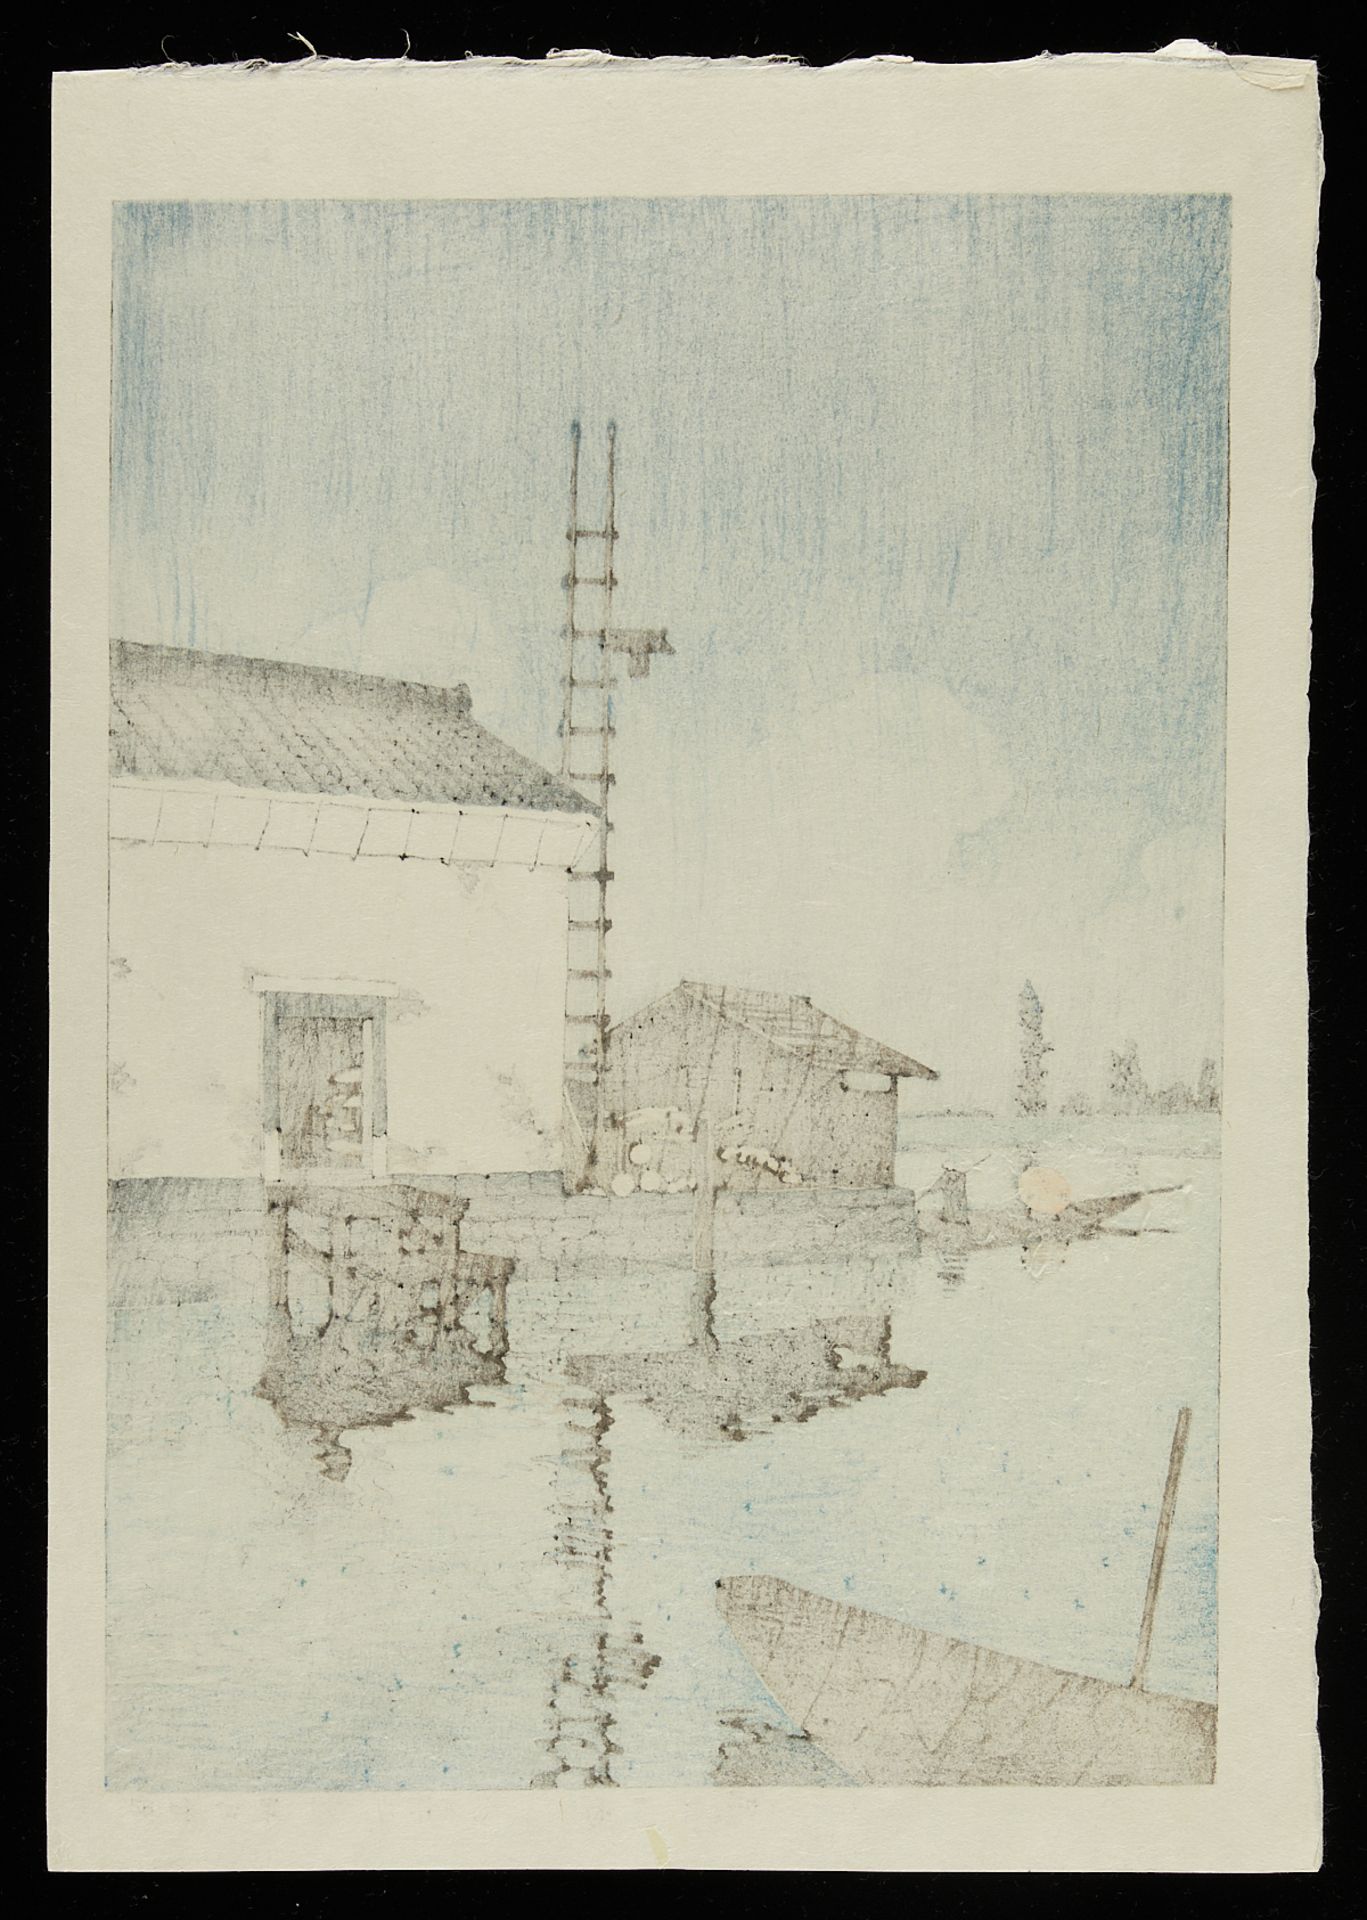 Hasui Kawase "Rain at Ushibori" Woodblock Print - Image 4 of 7